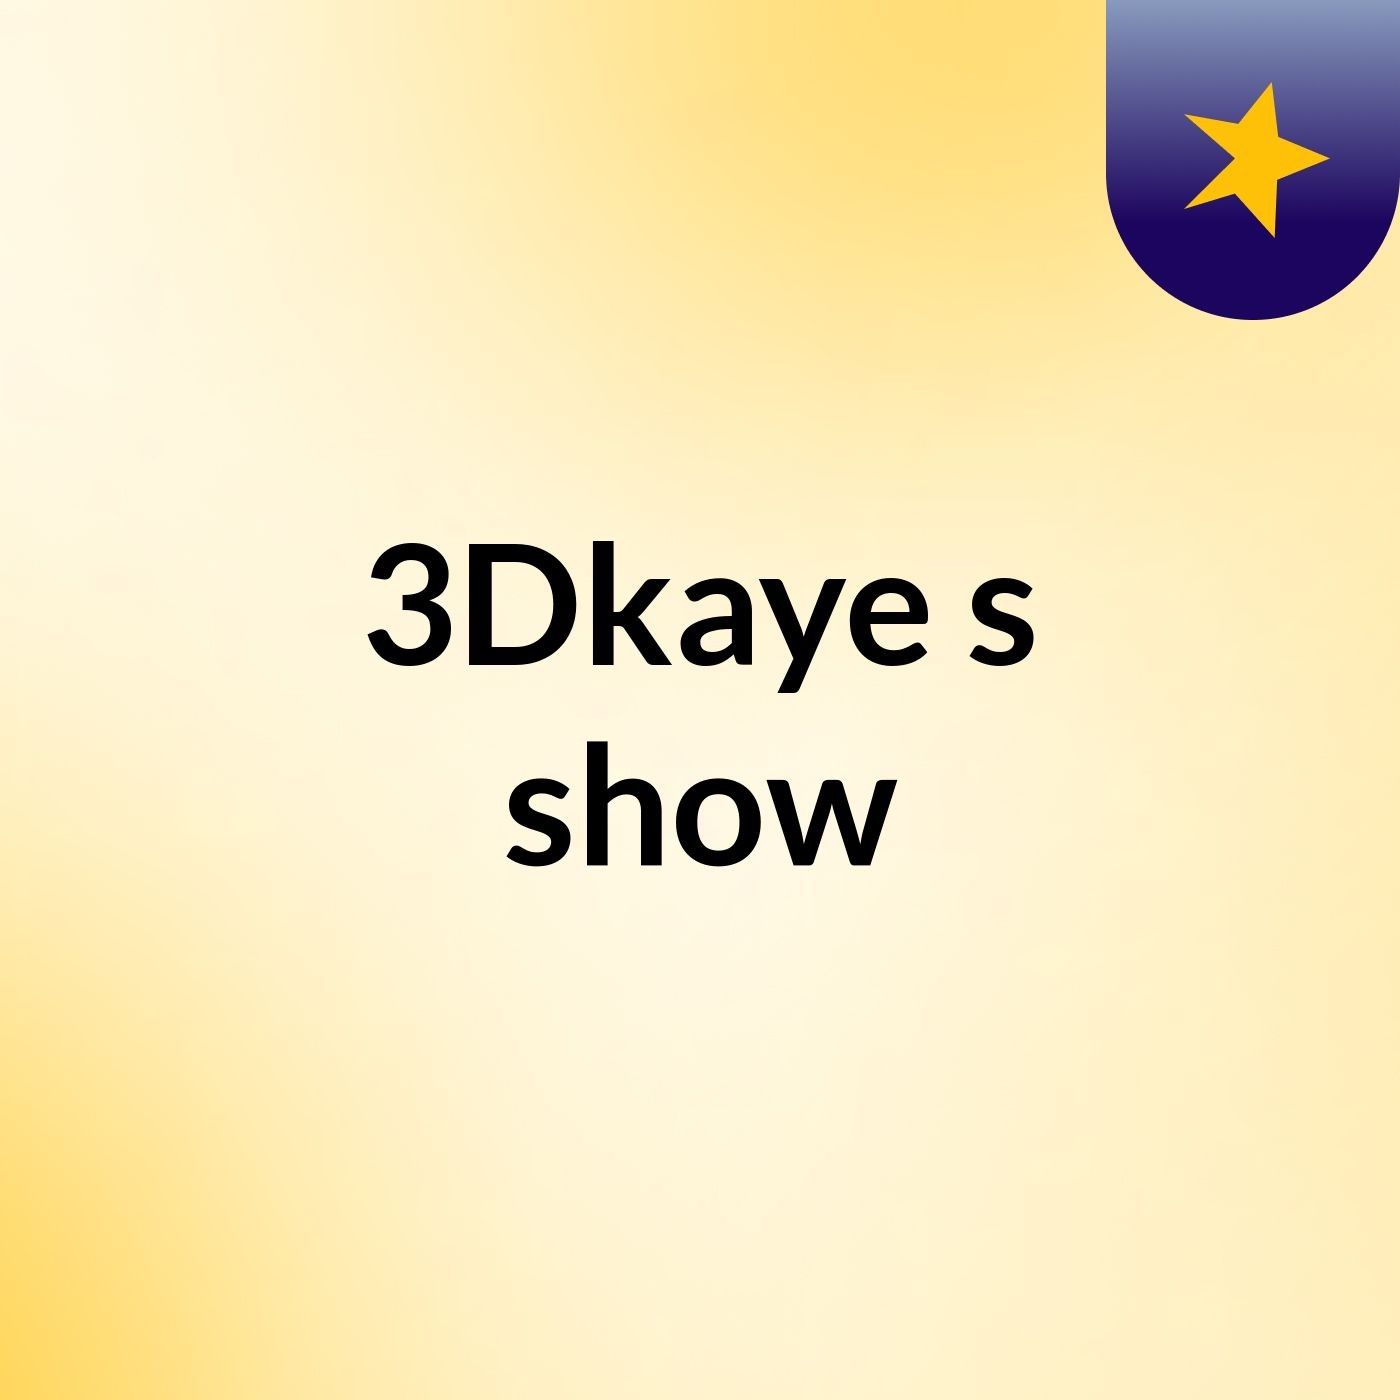 3Dkaye's show